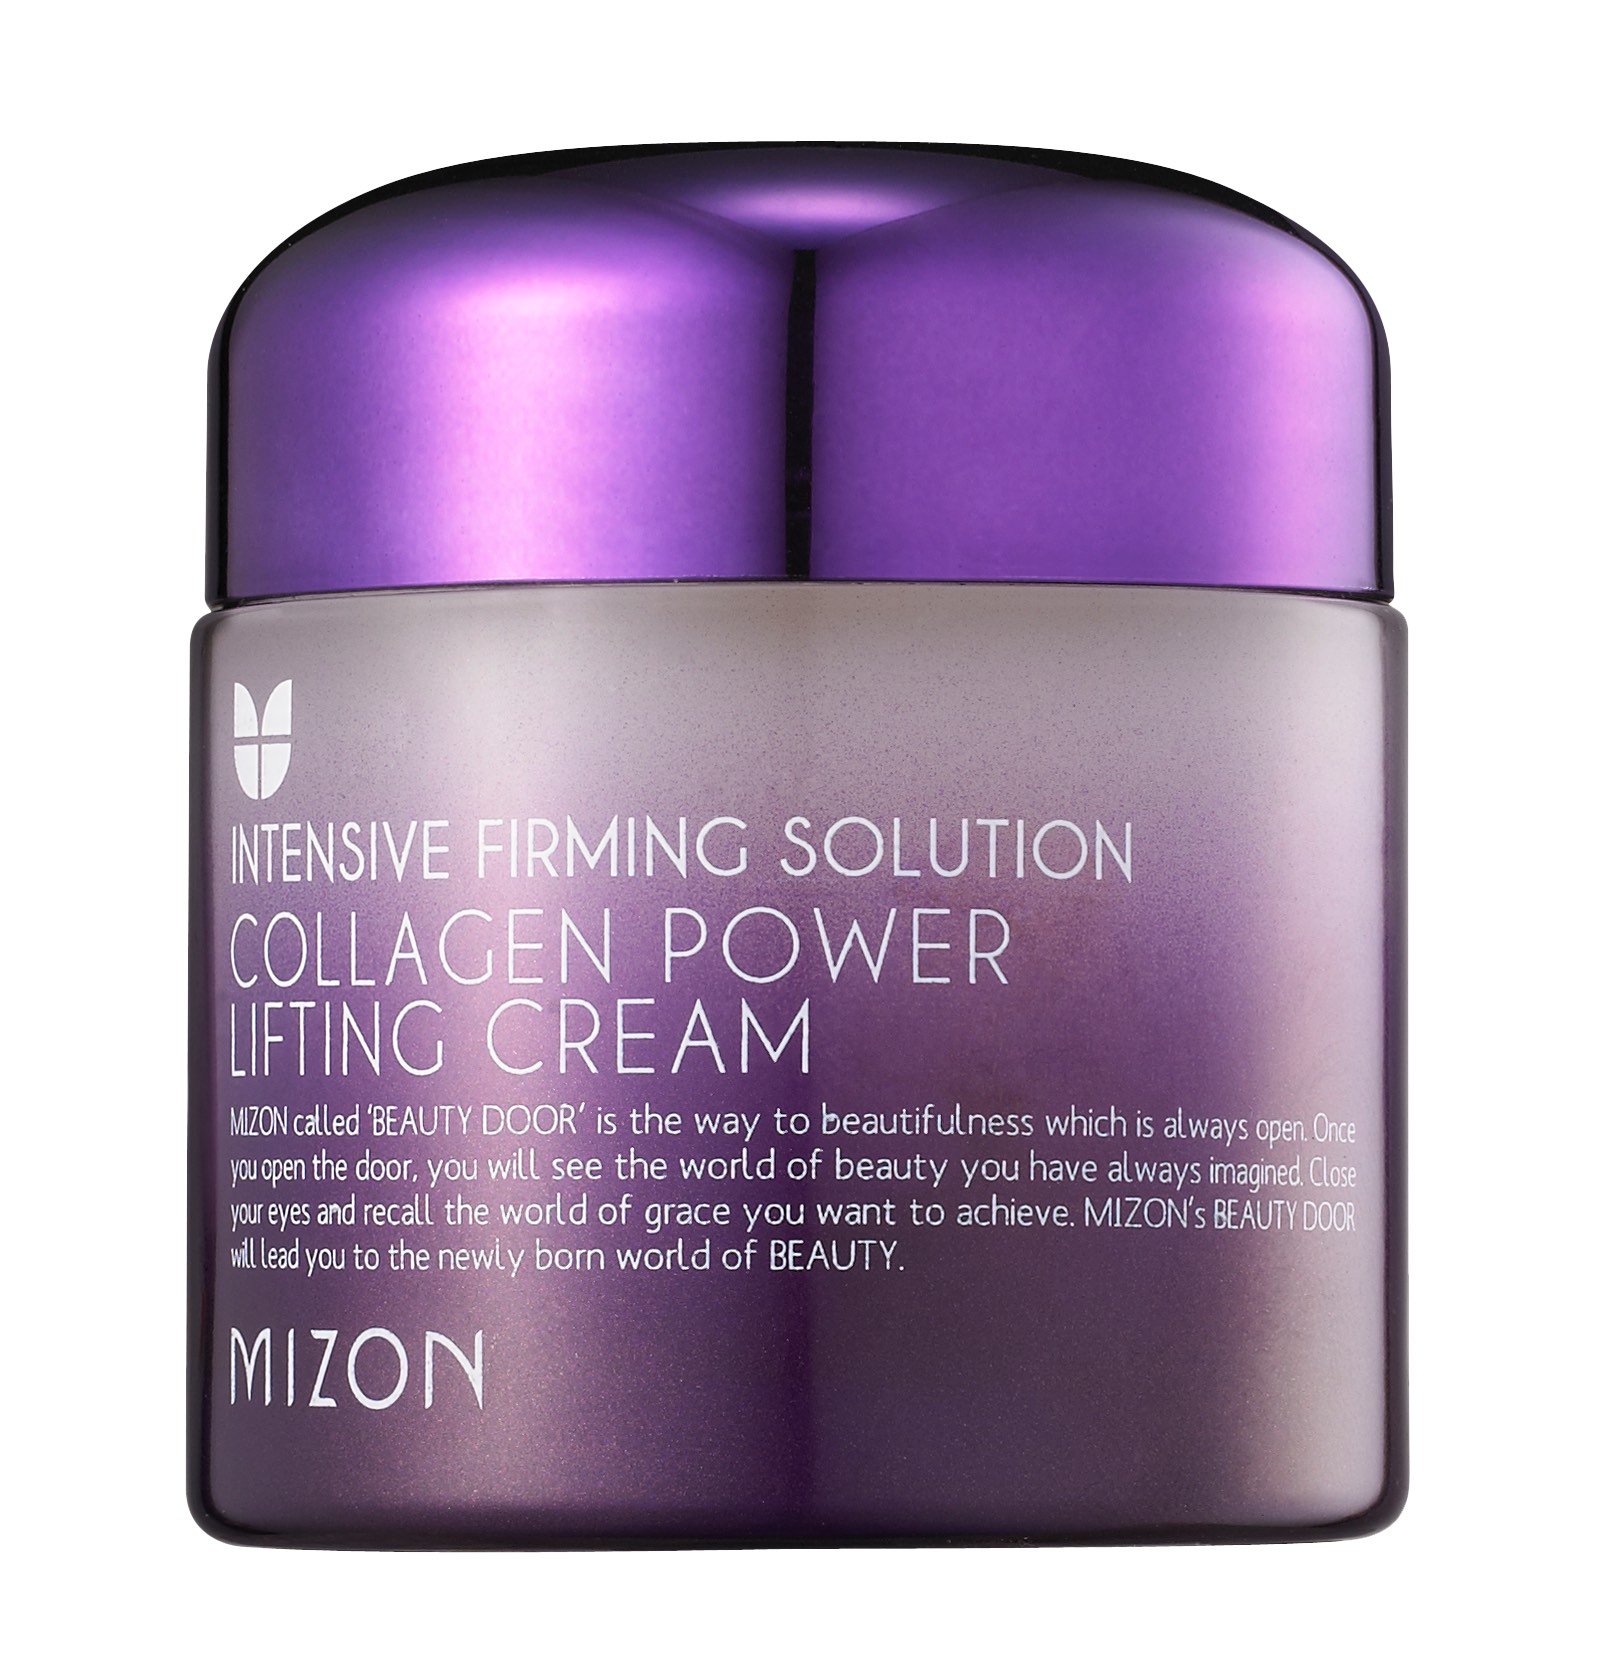  MIZON Collagen Power Lifting Cream